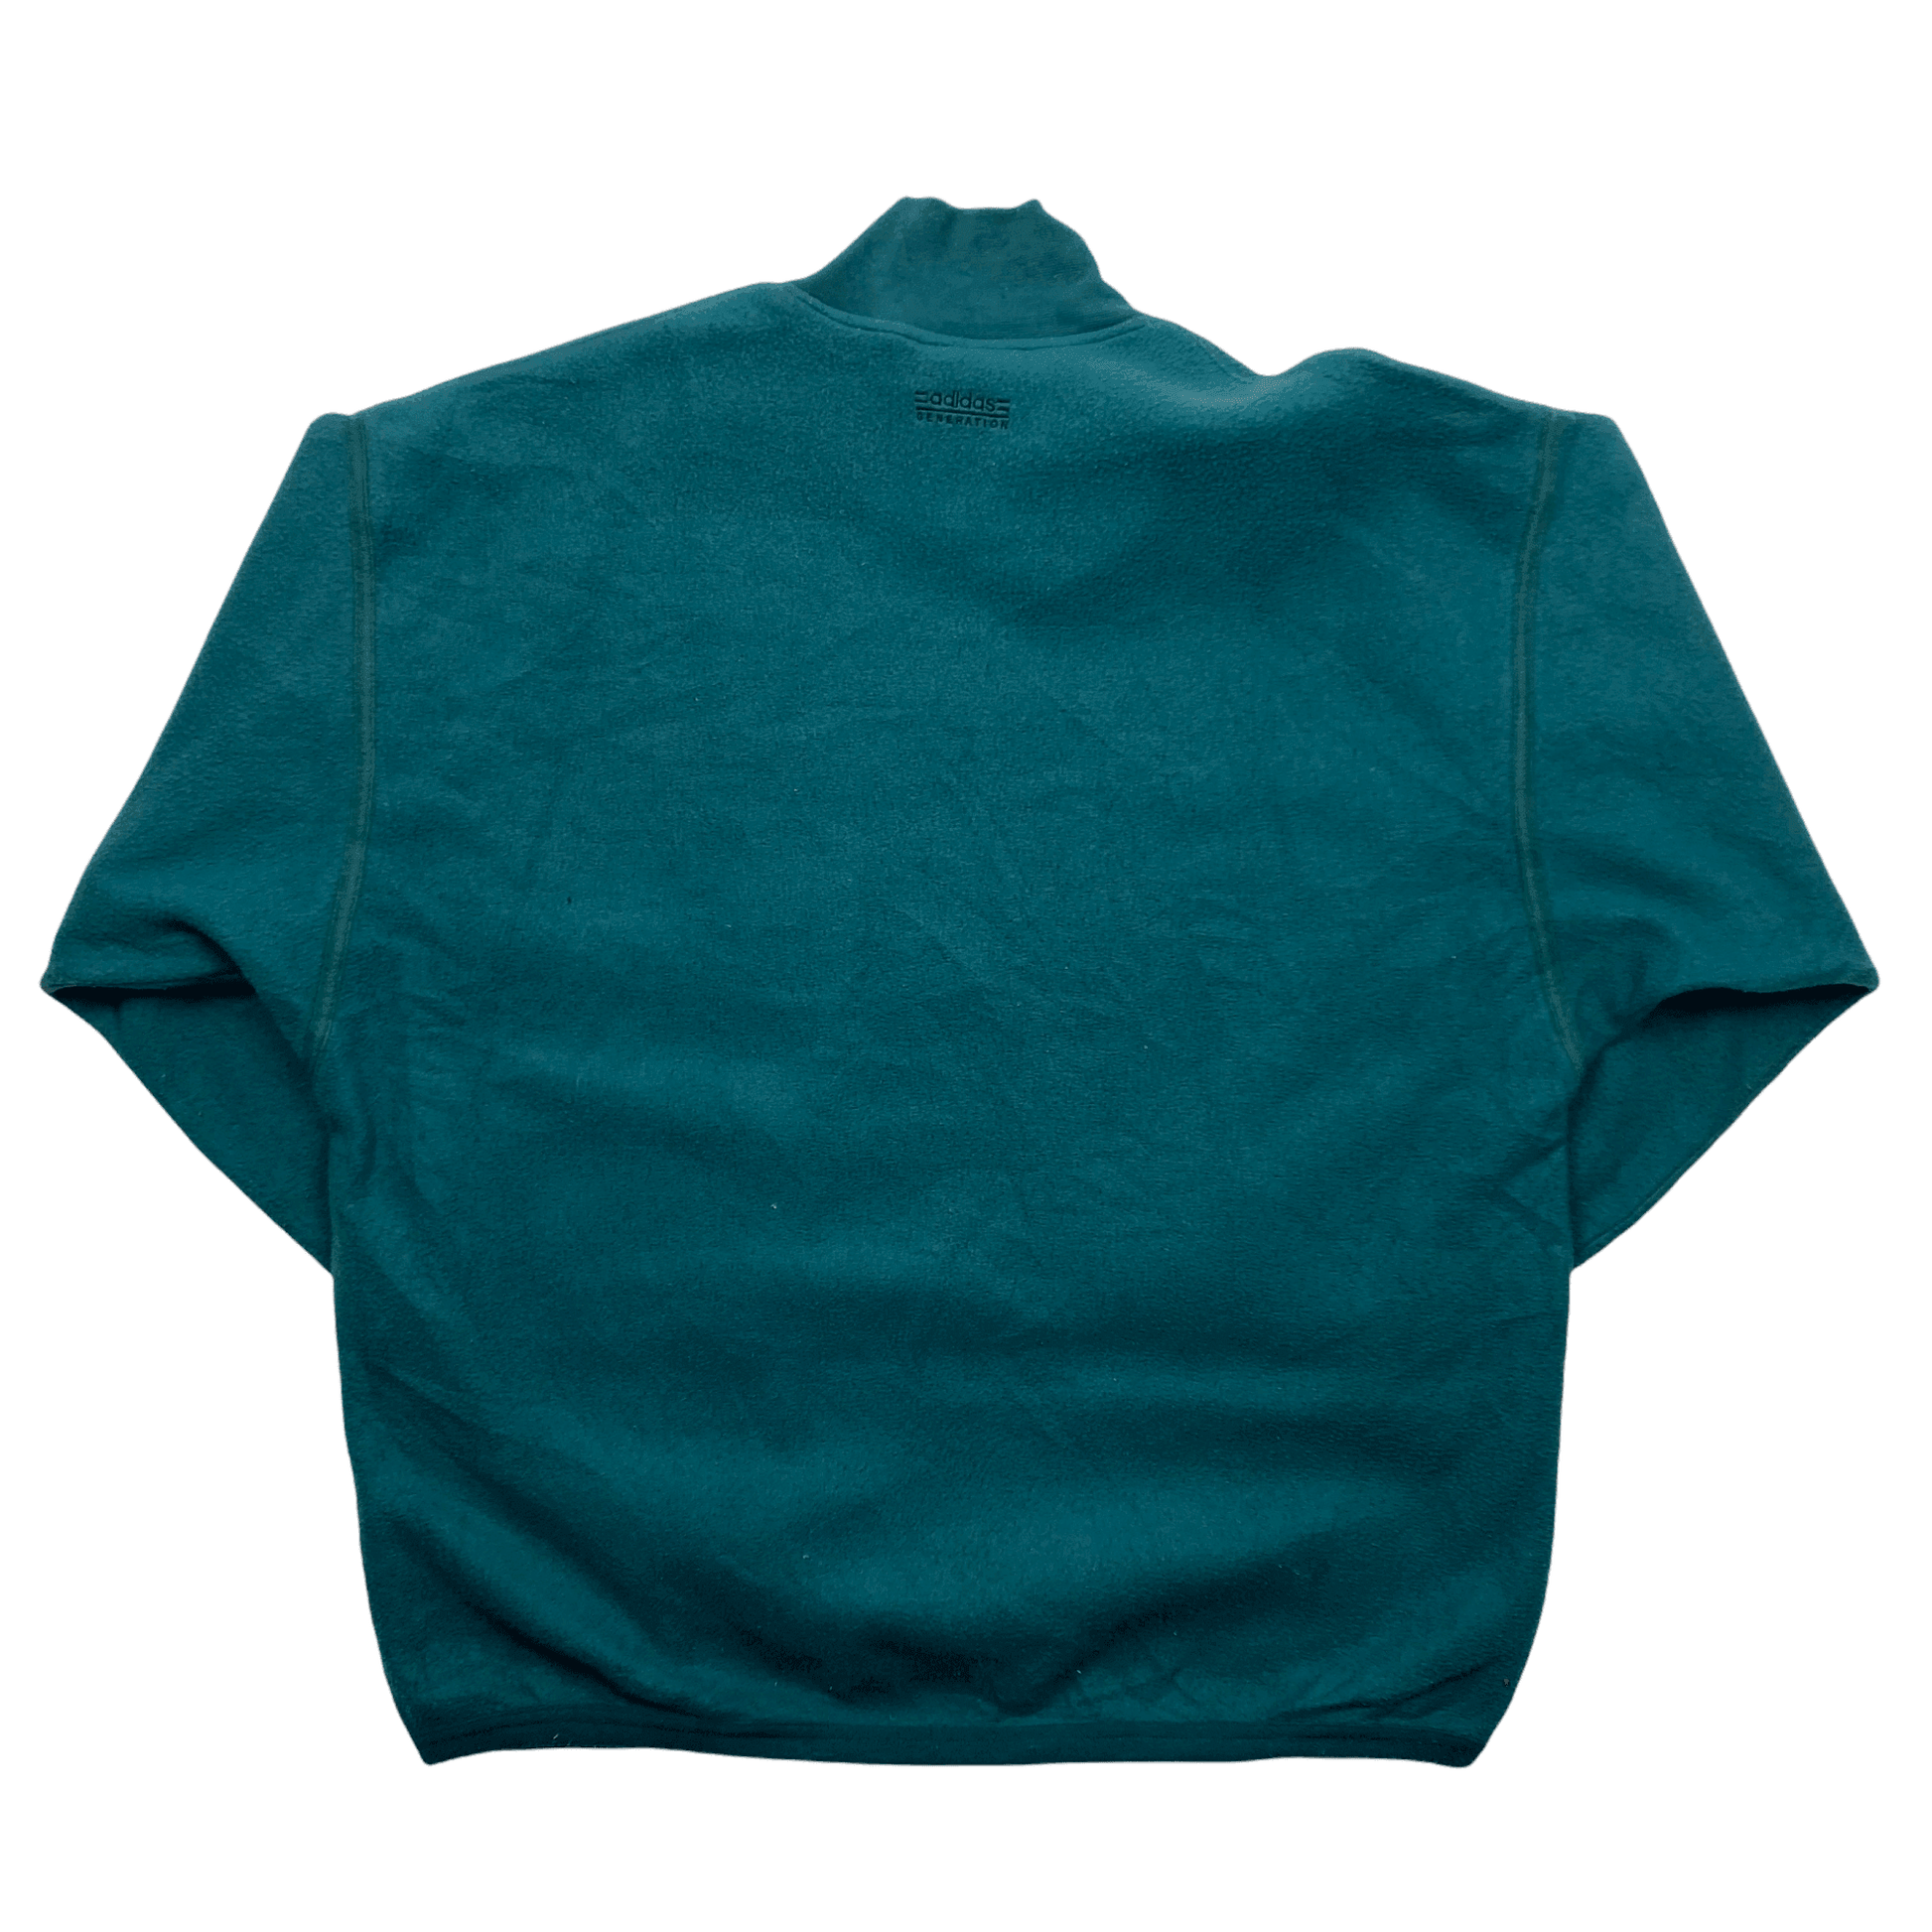 Vintage 90s Green/ Blue Adidas Spell-Out Fleece Sweatshirt - Extra Large - The Streetwear Studio